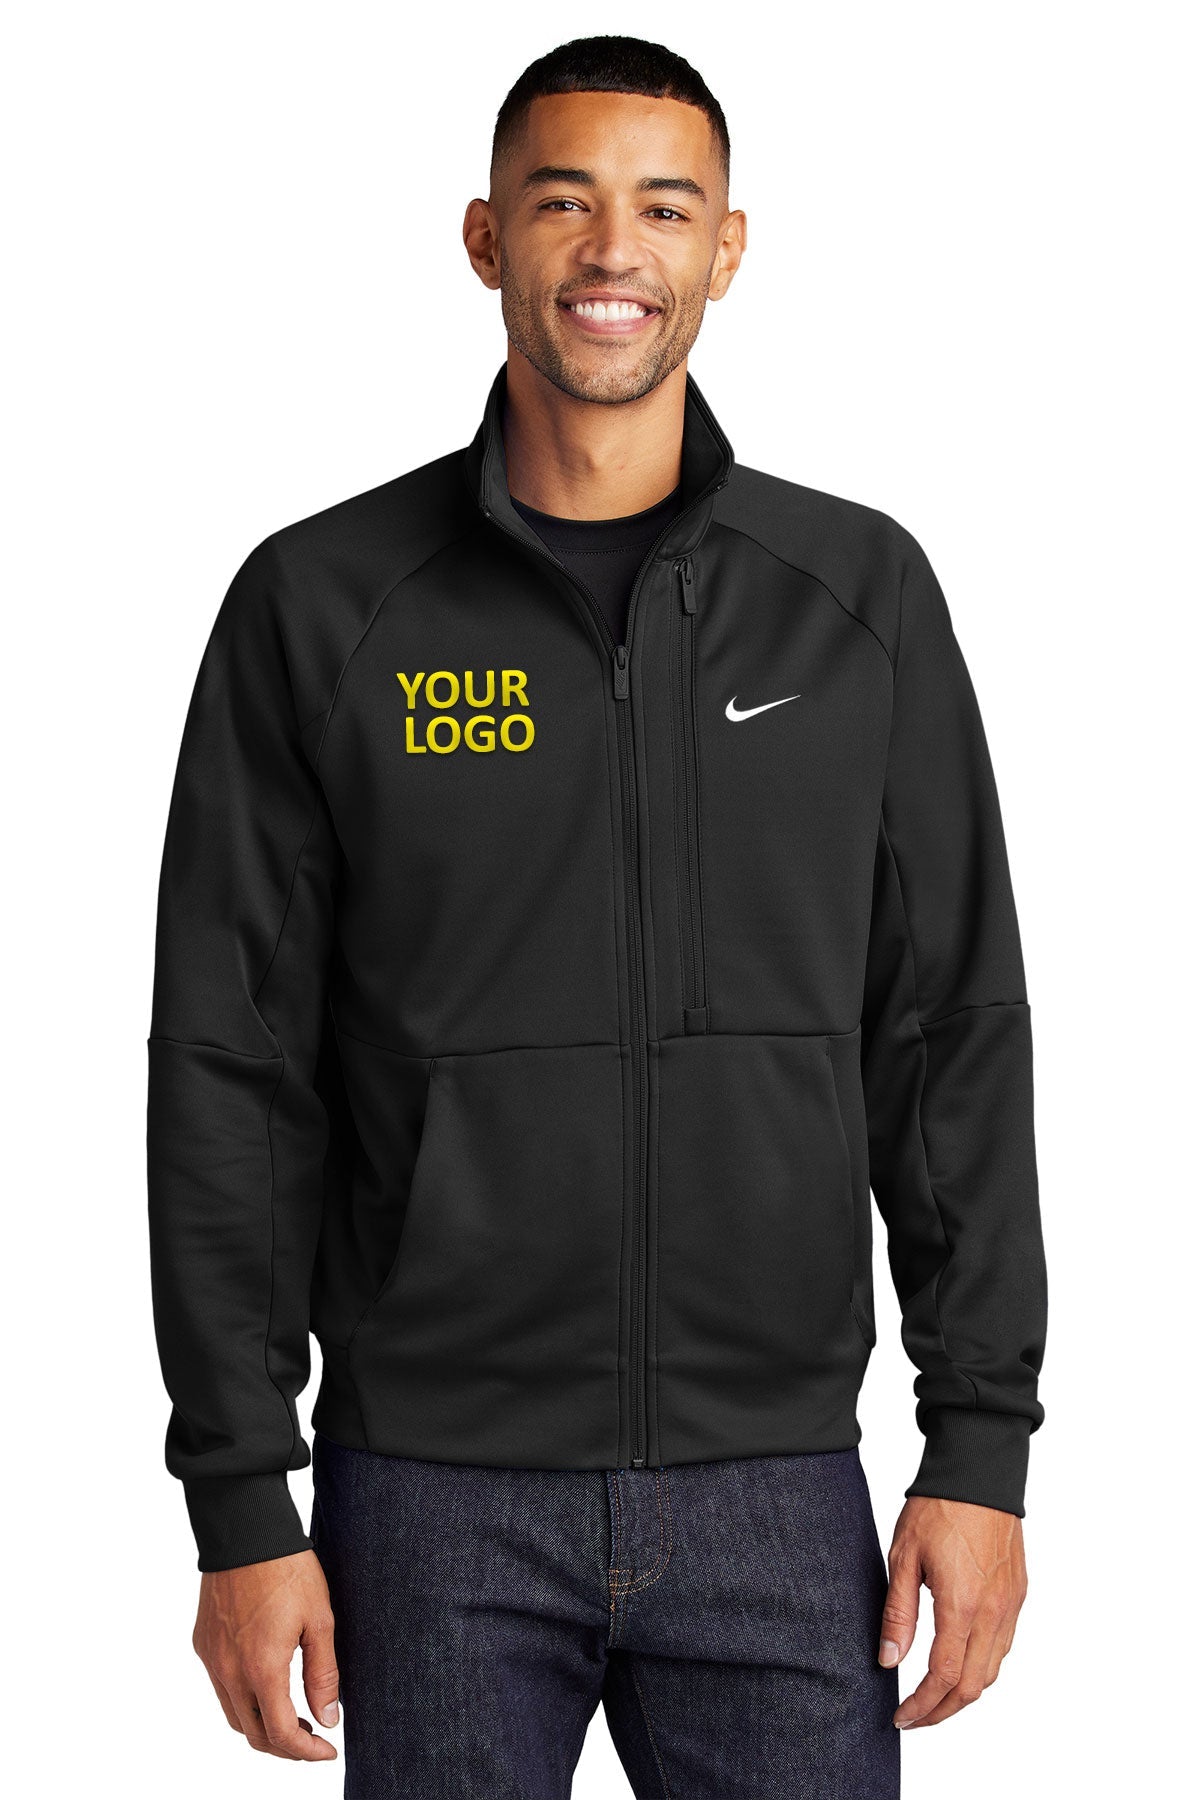 Nike Black NKFD9891 company jackets with logo